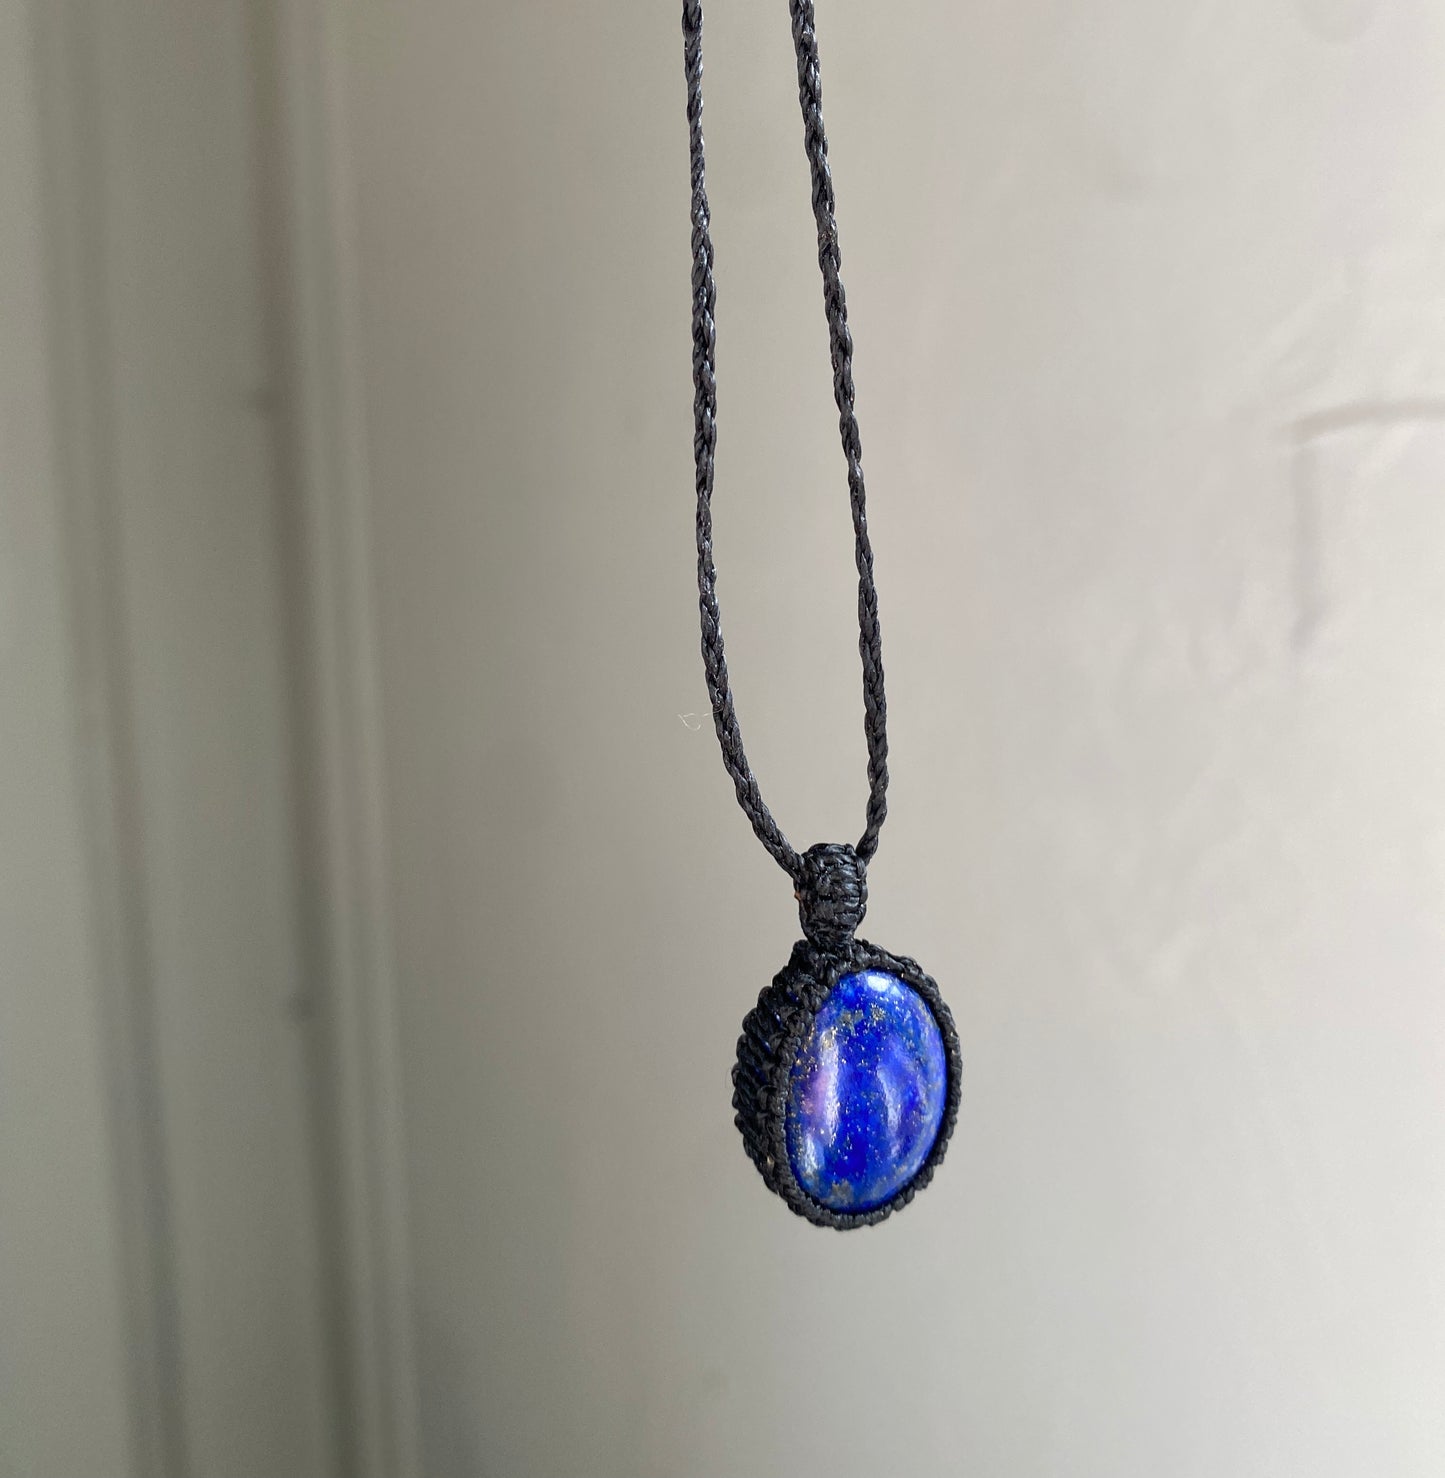 Collier artisanal - pierre précieuse Lapis Lazuli